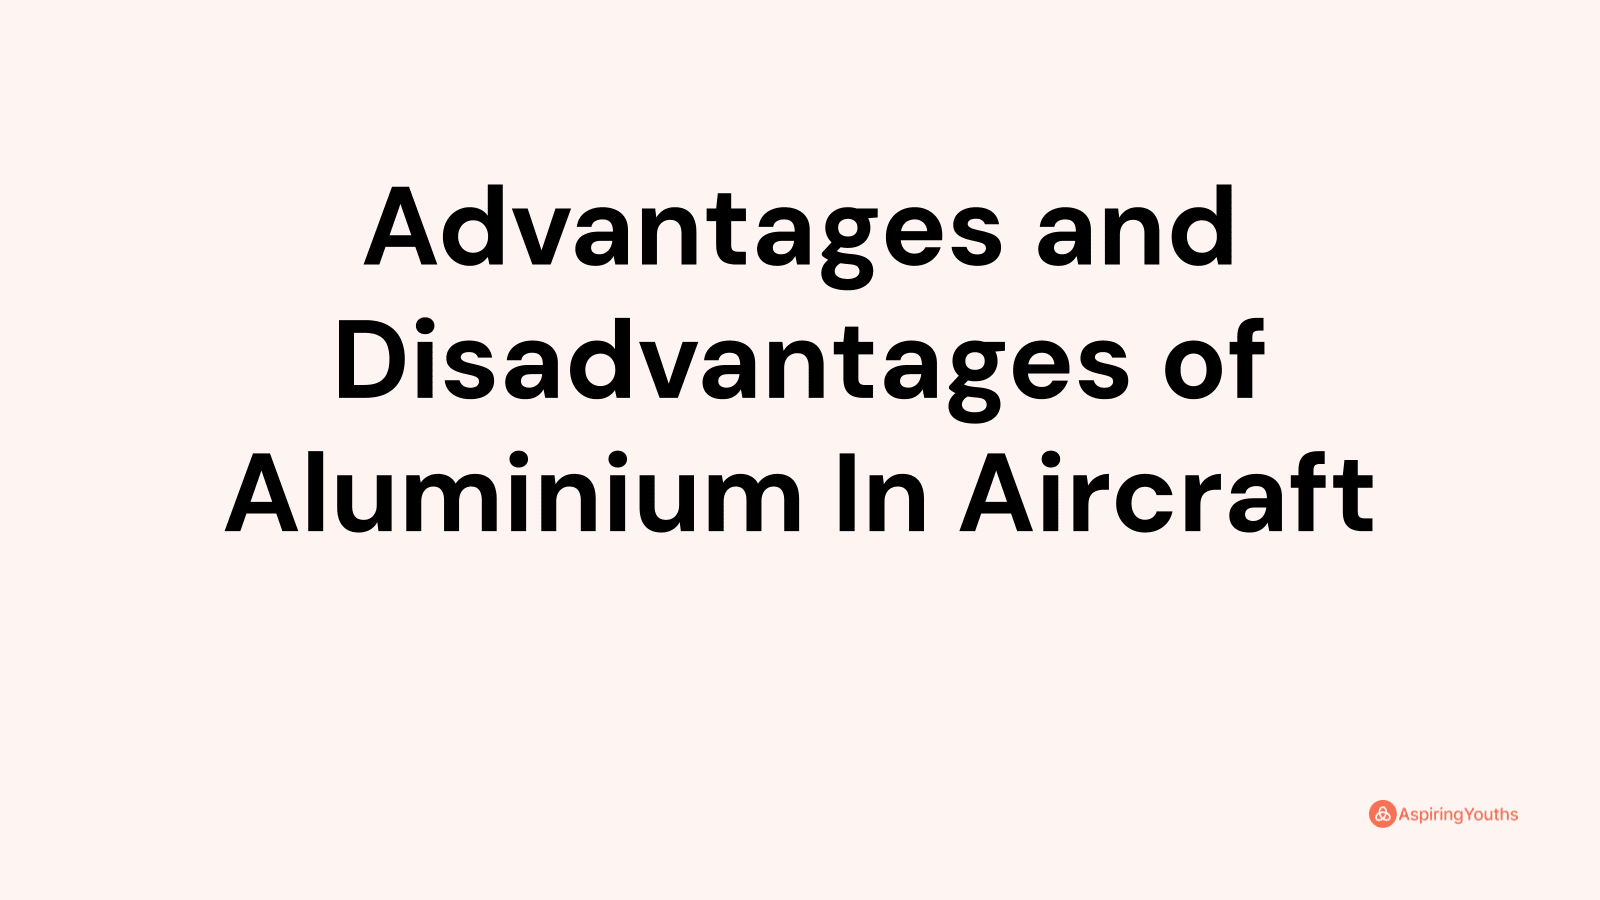 Advantages and disadvantages of Aluminium In Aircraft